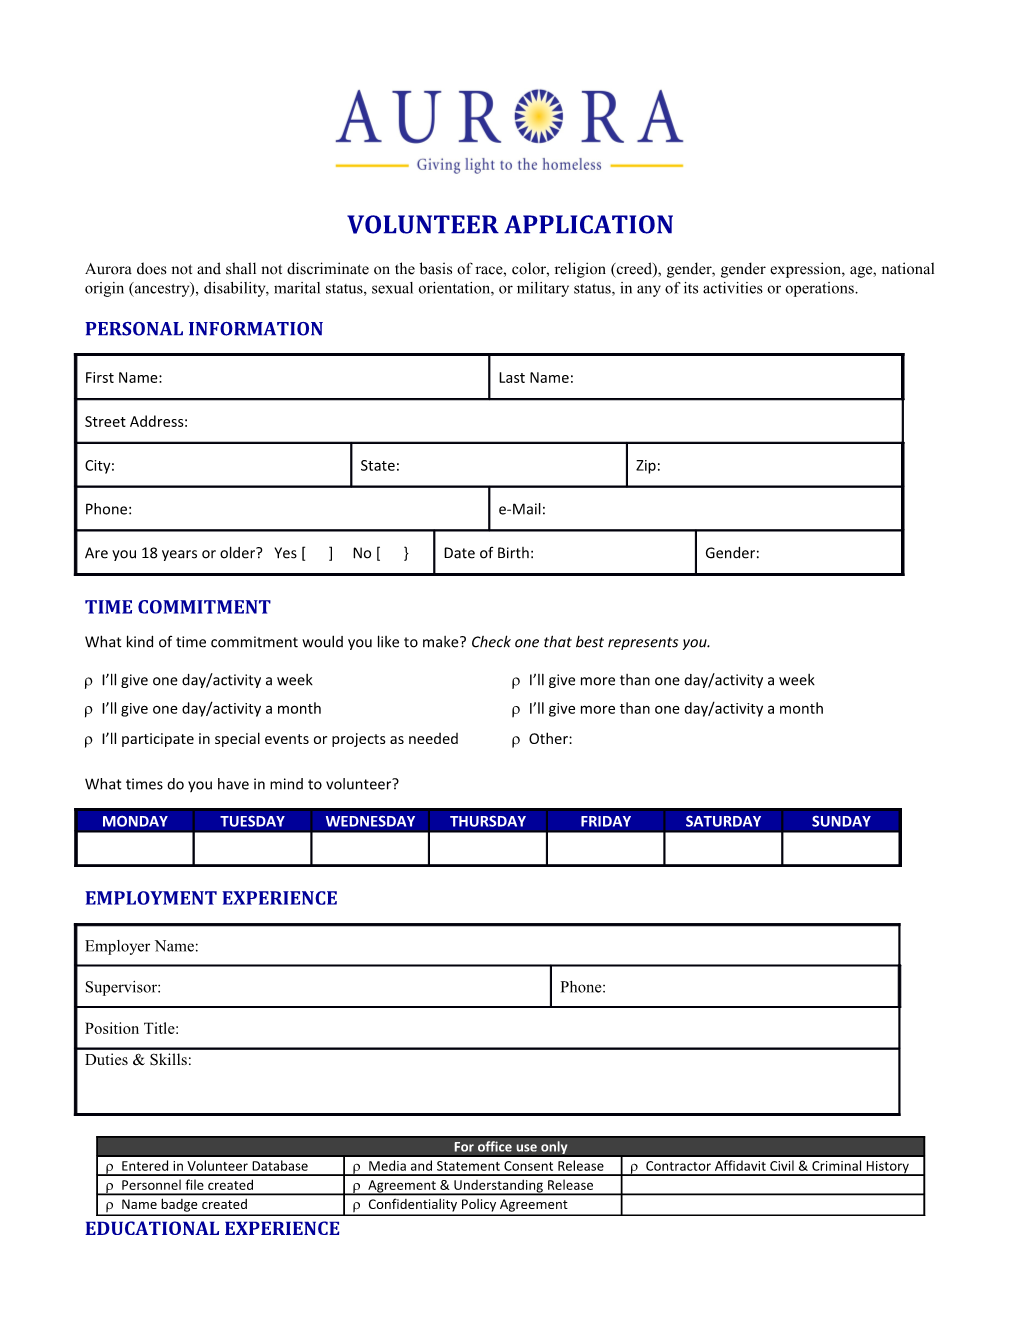 Volunteer Application s14